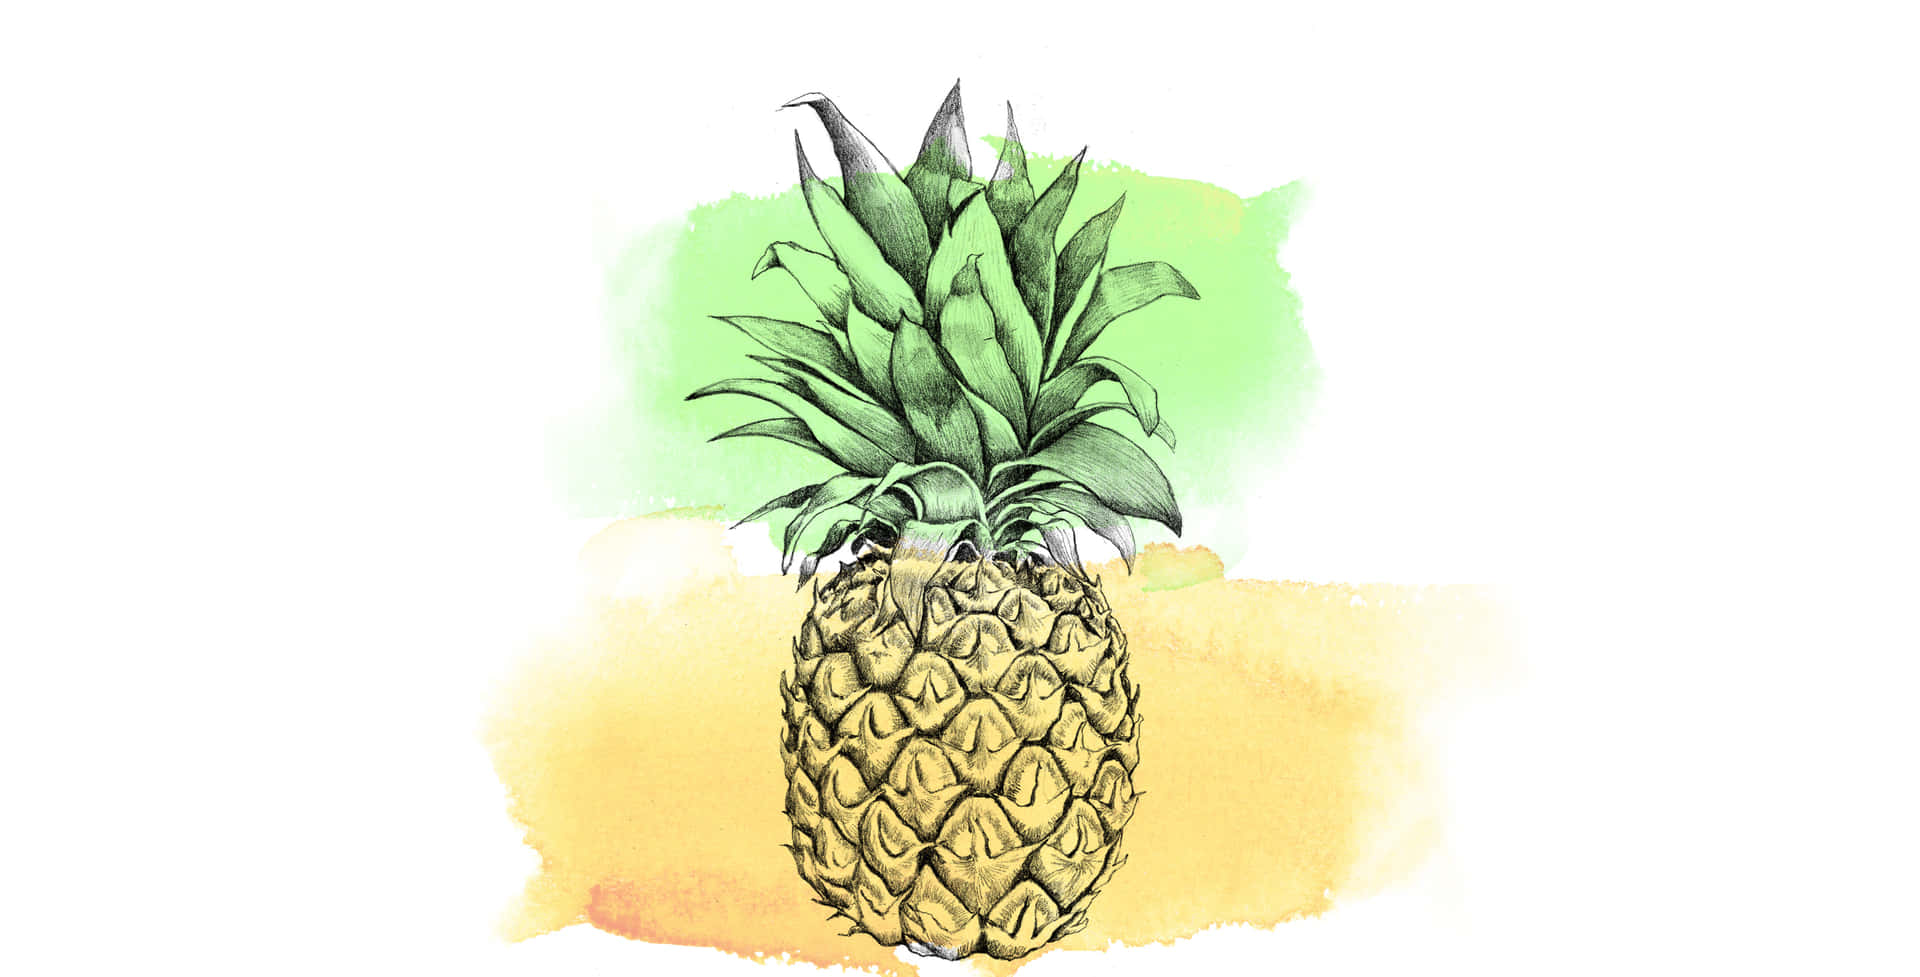 Enjoy A Sweet Desktop Experience with Pineapple Wallpaper